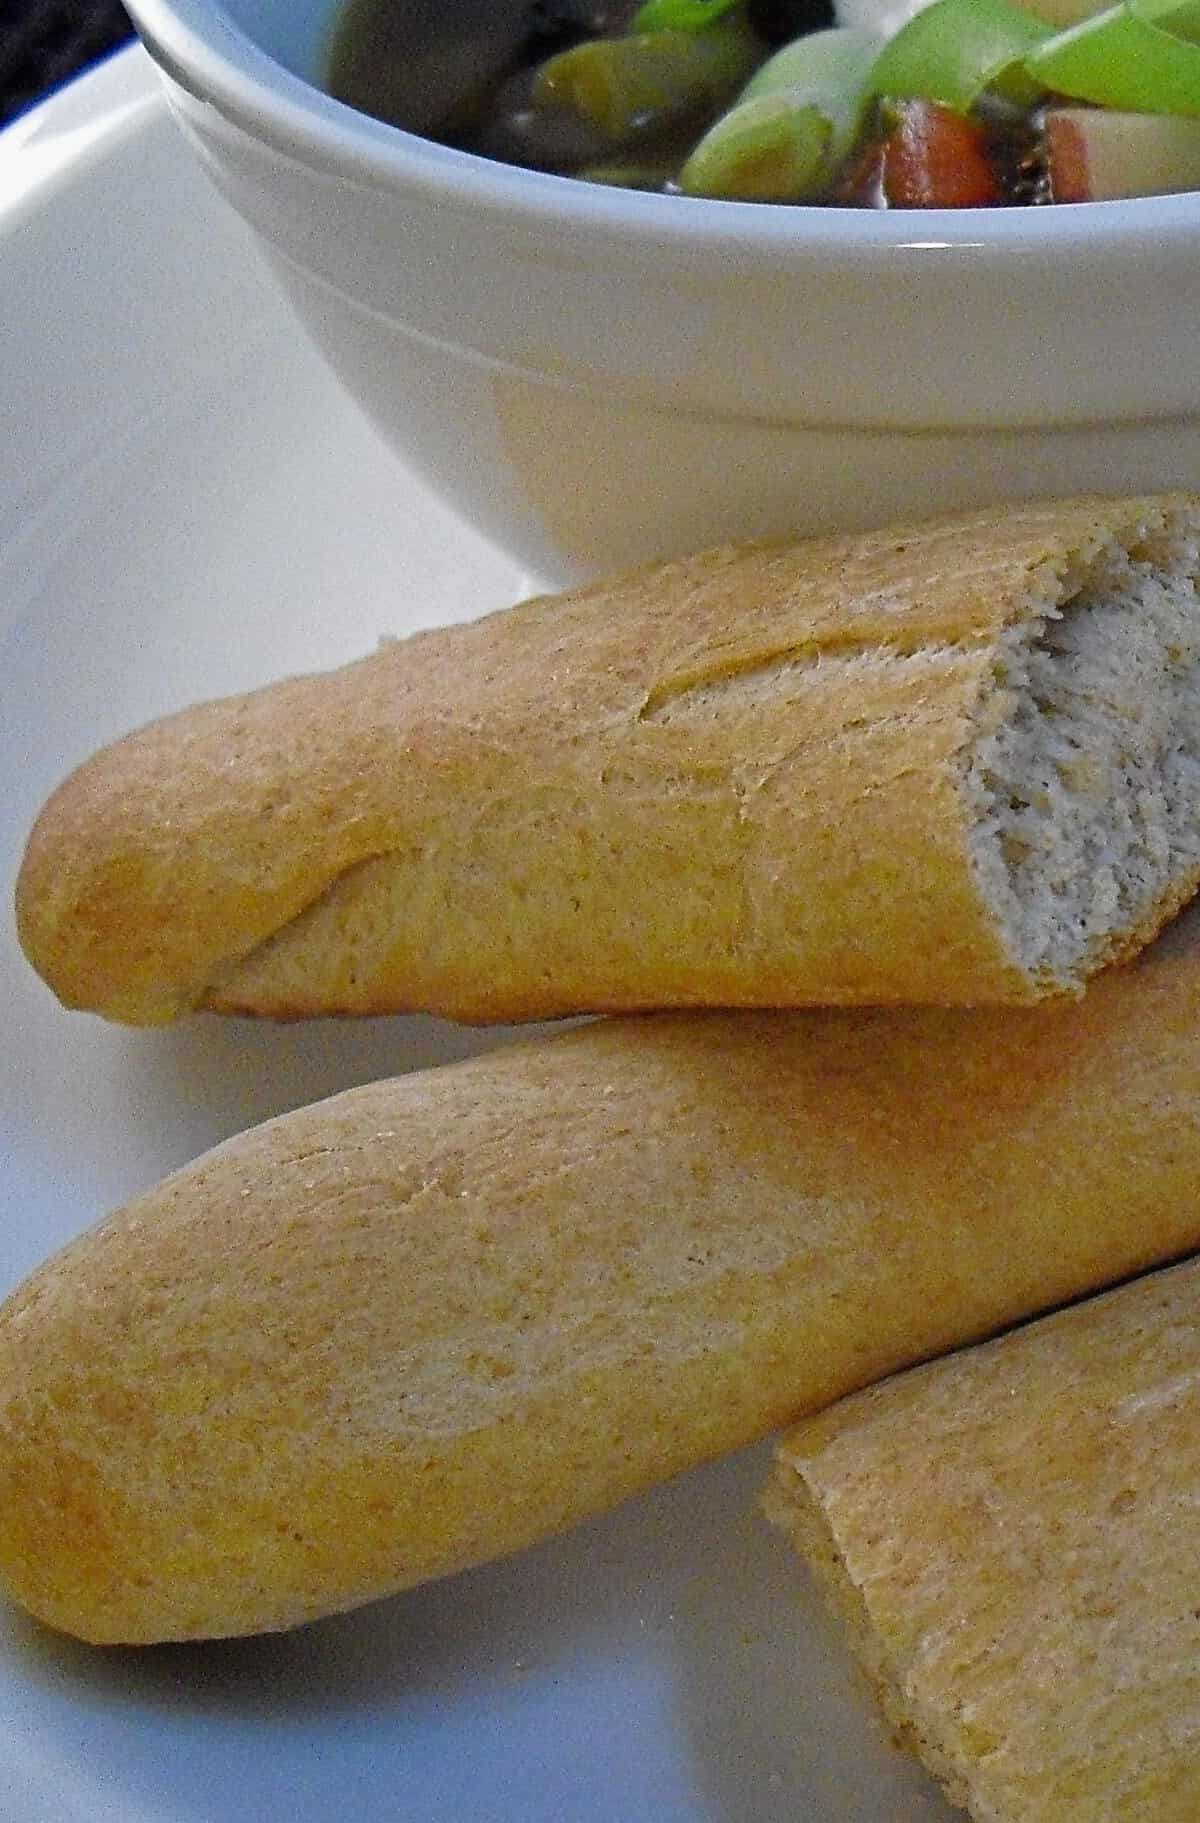  These sourdough breadsticks will make your taste buds dance!